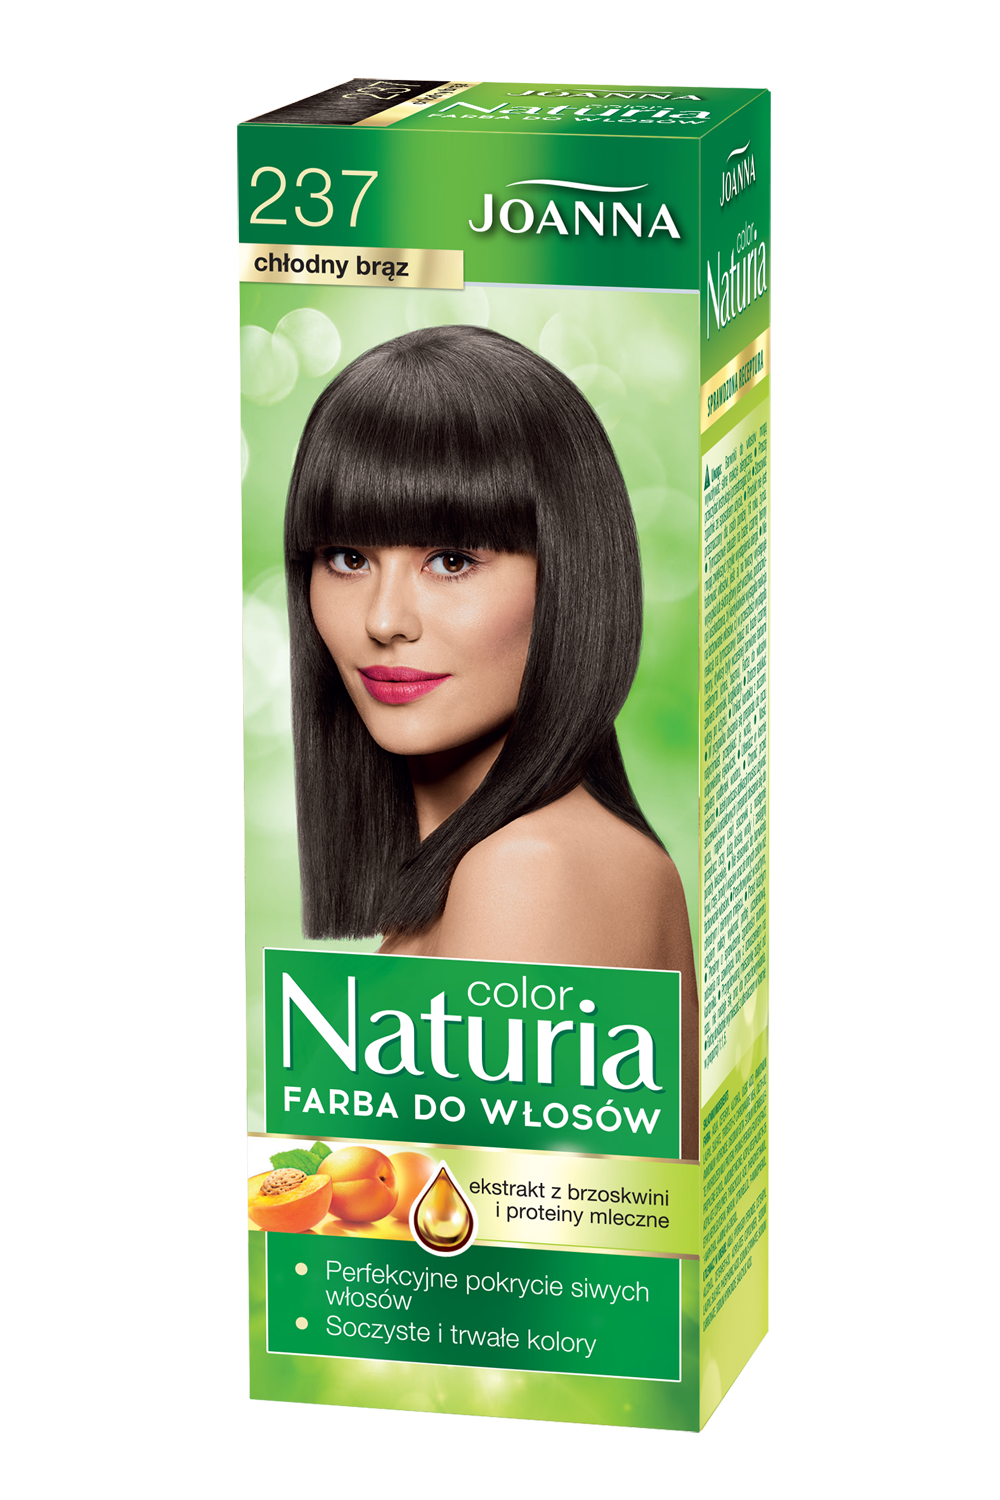 Farba do włosów Joanna Naturia Color w odcieniu nr 237 chłodny brąz